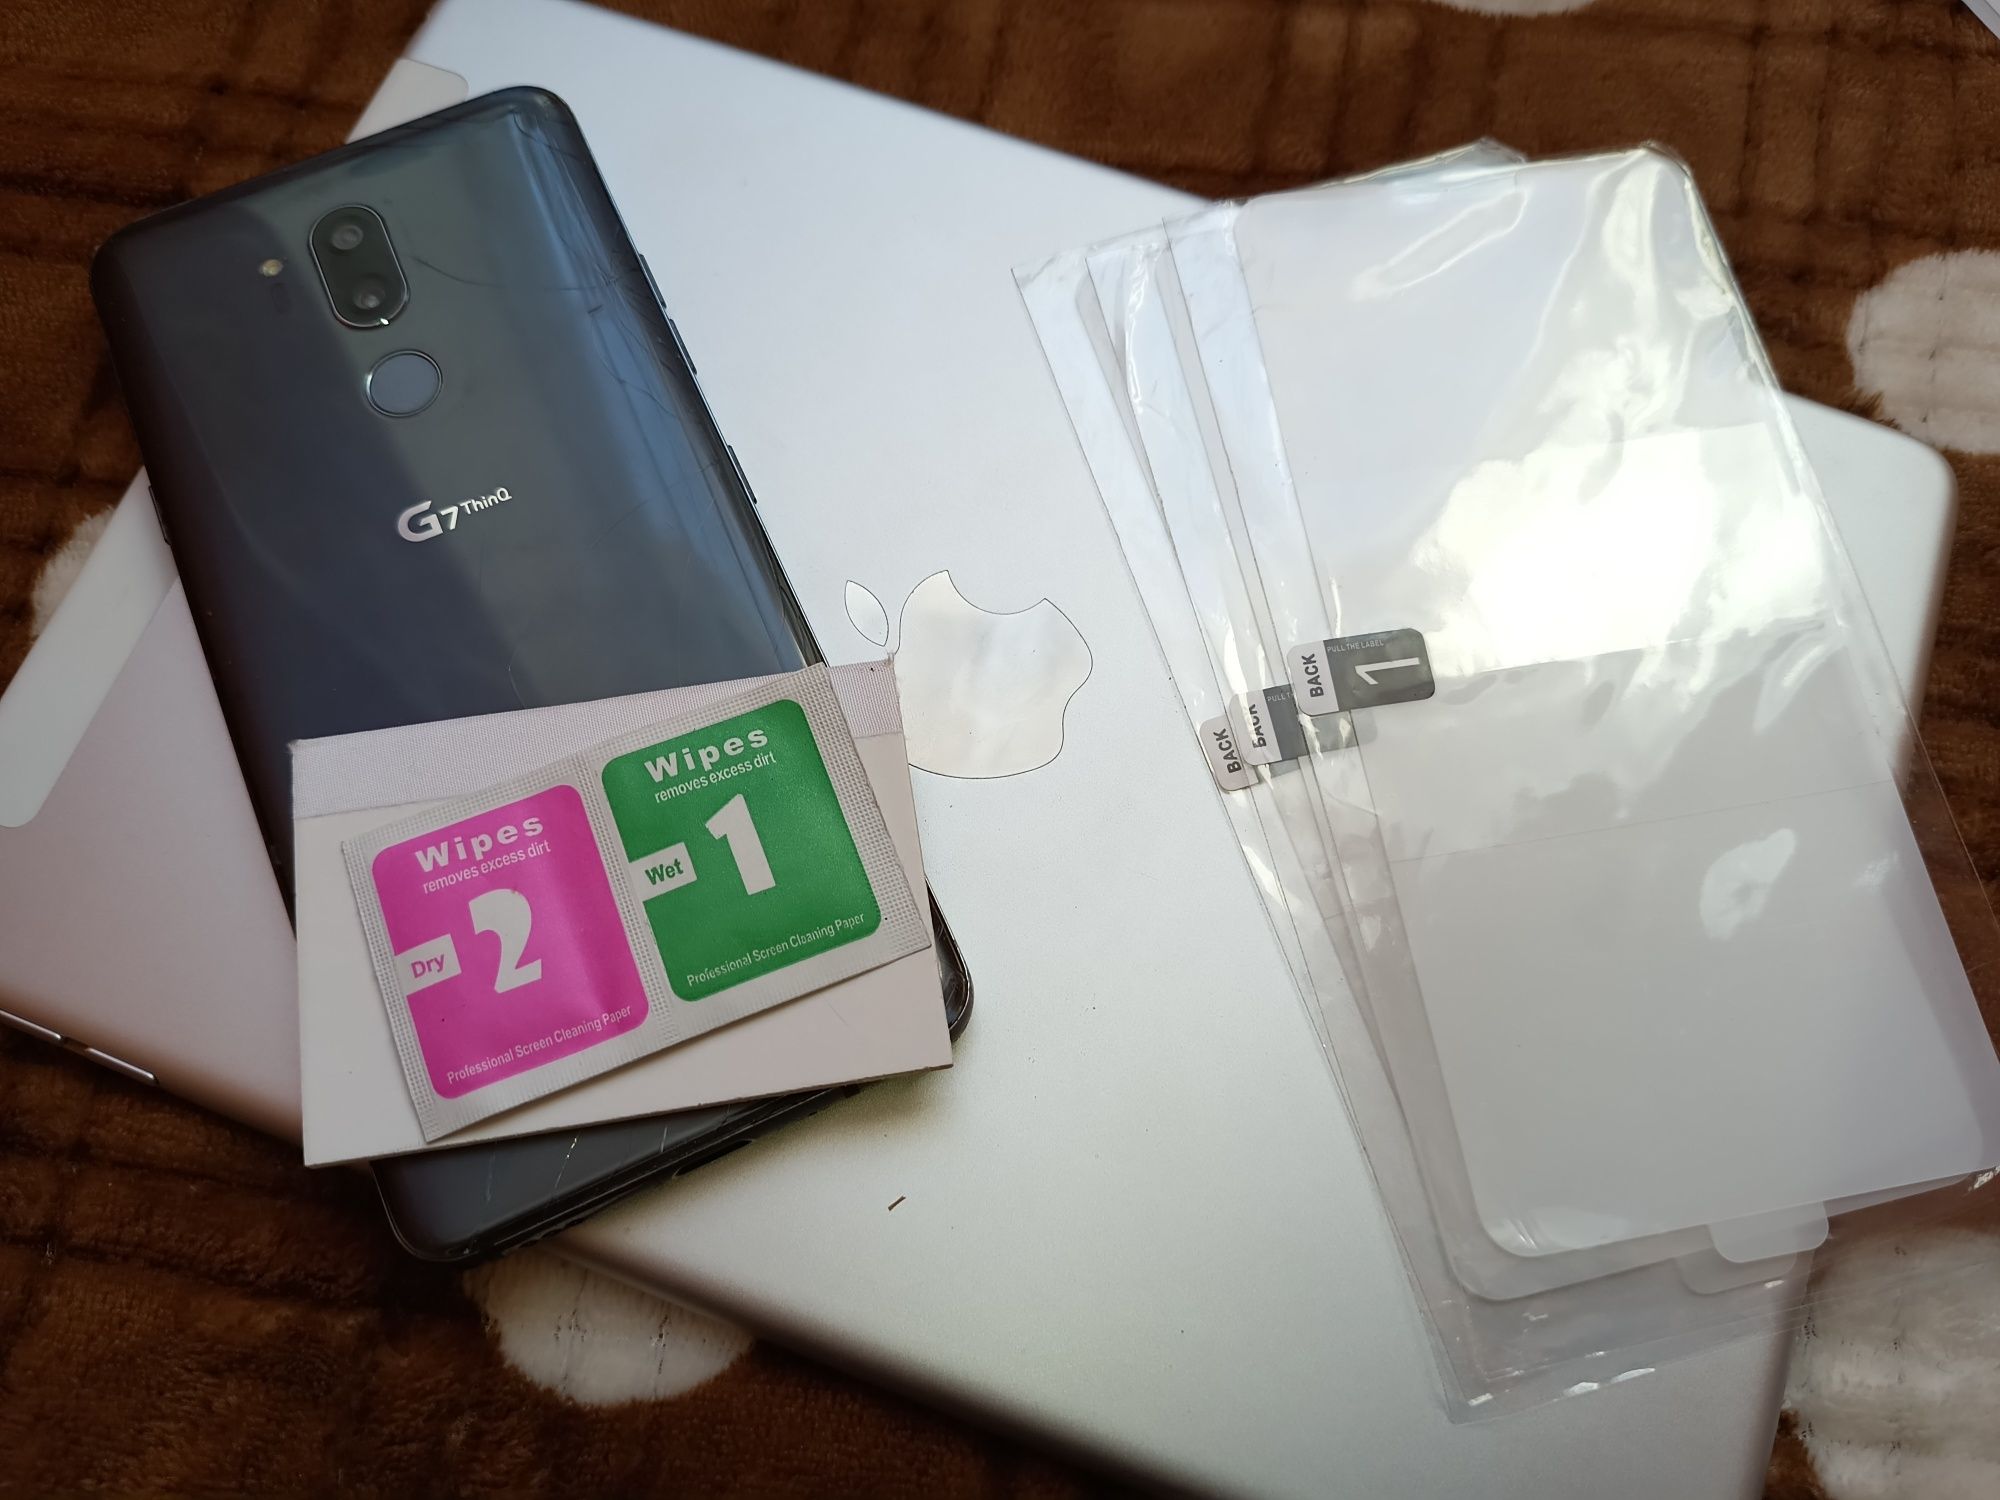 Гідрогелева плівка LG ThinQ G7